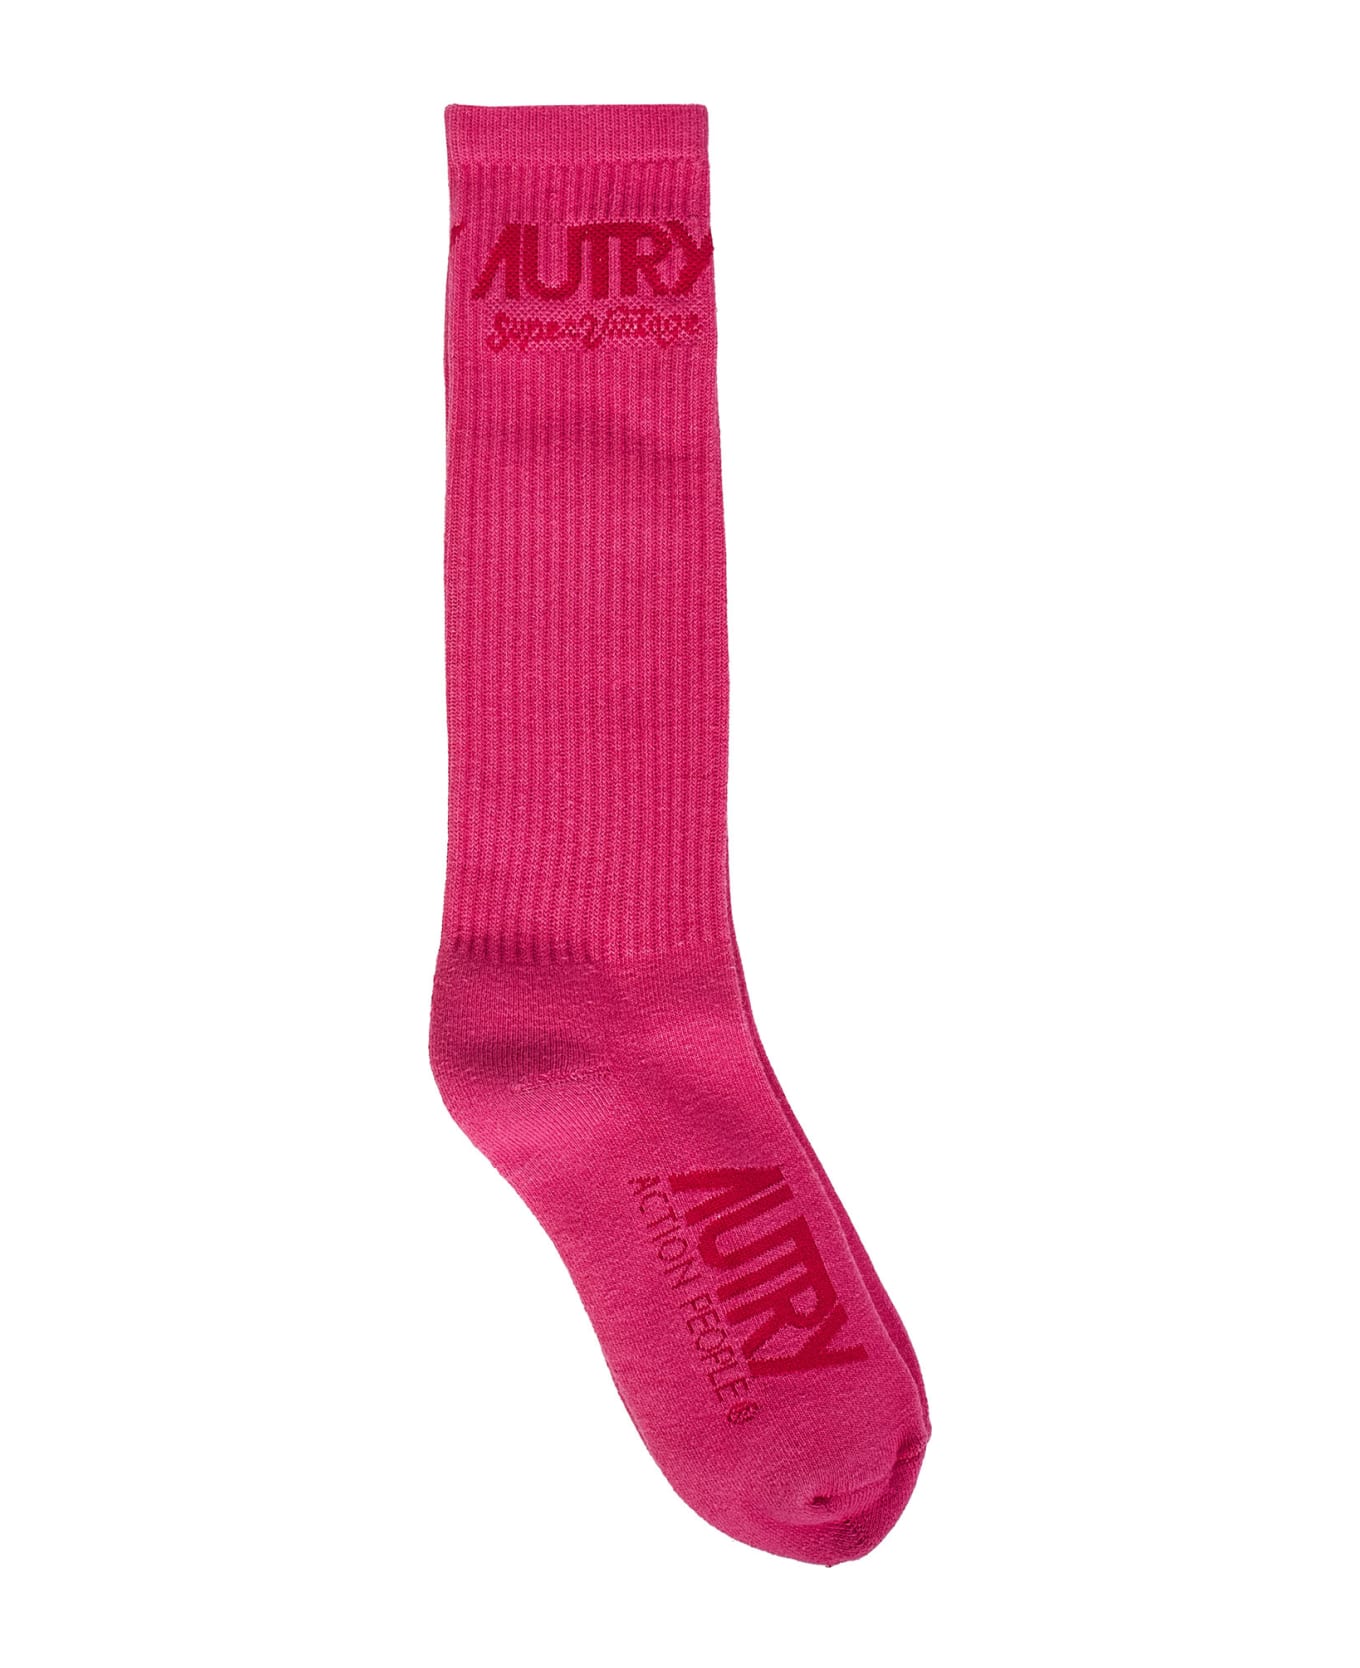 Autry Supervintage Socks - Tinto Pink